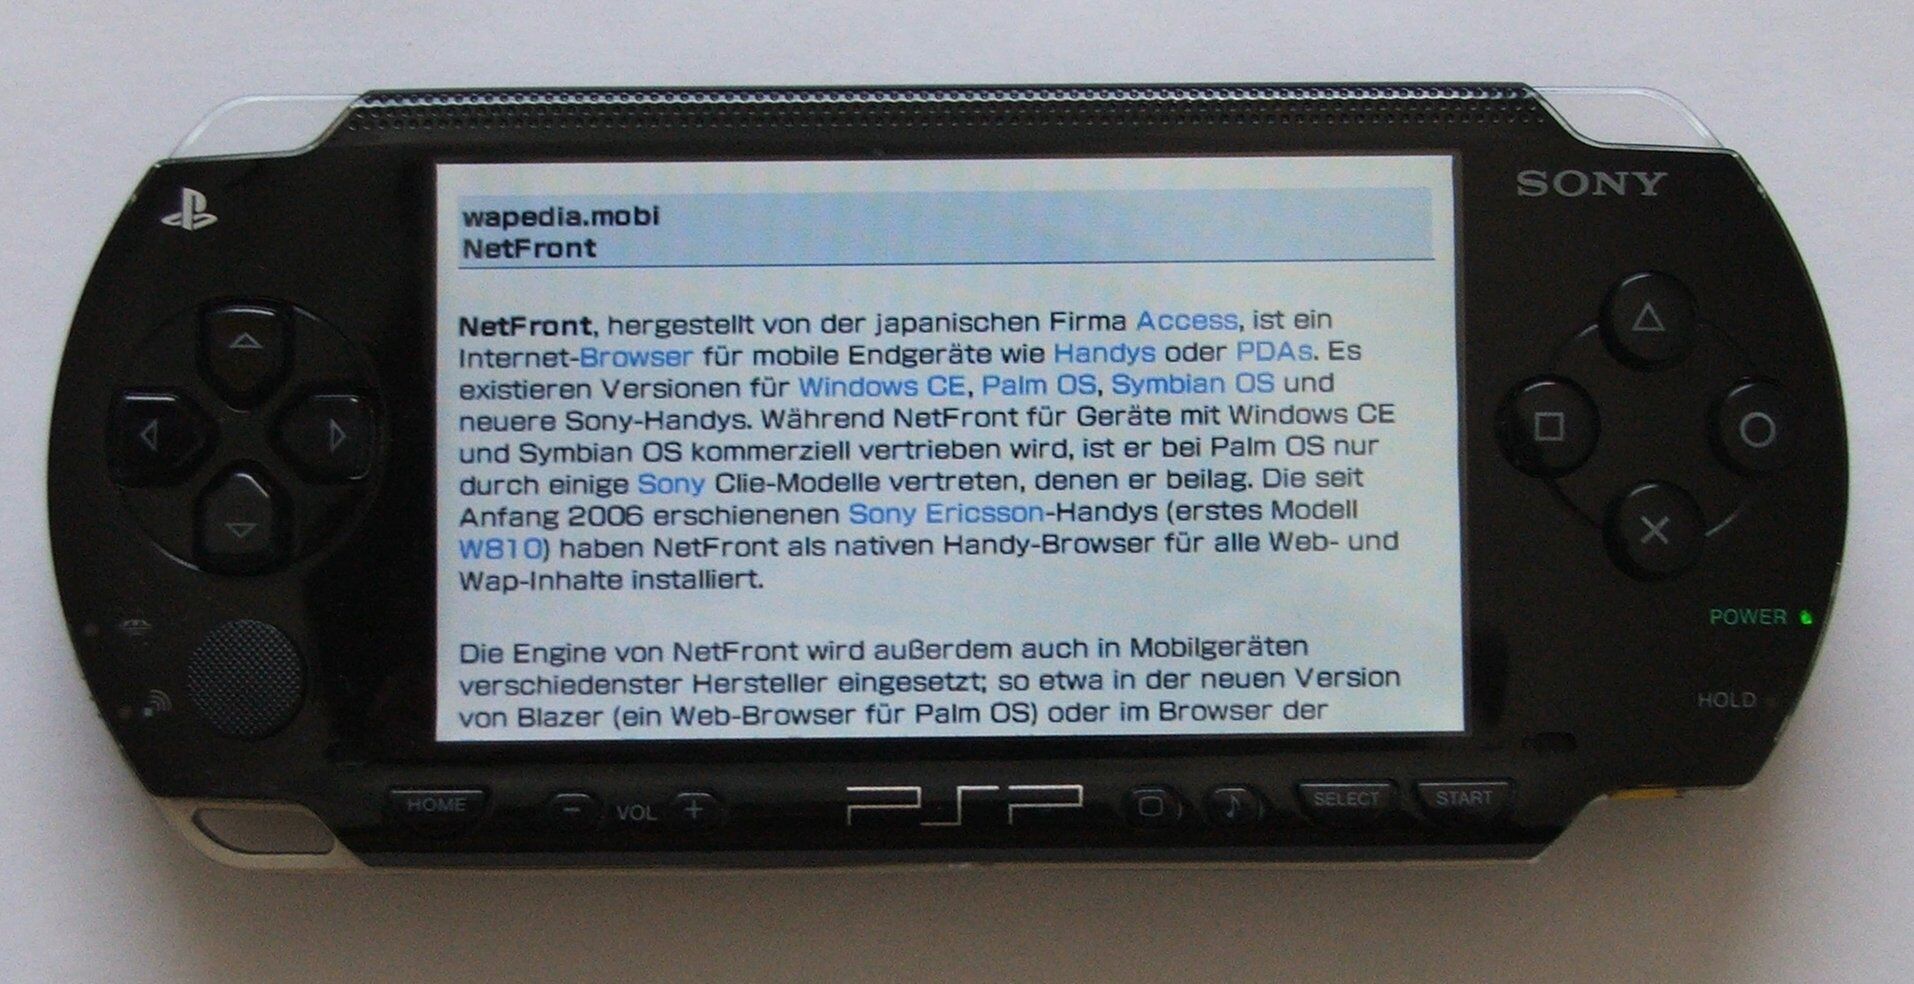 PSP Go - Piano Black - Standard Edition: Sony PSP: Video Games 